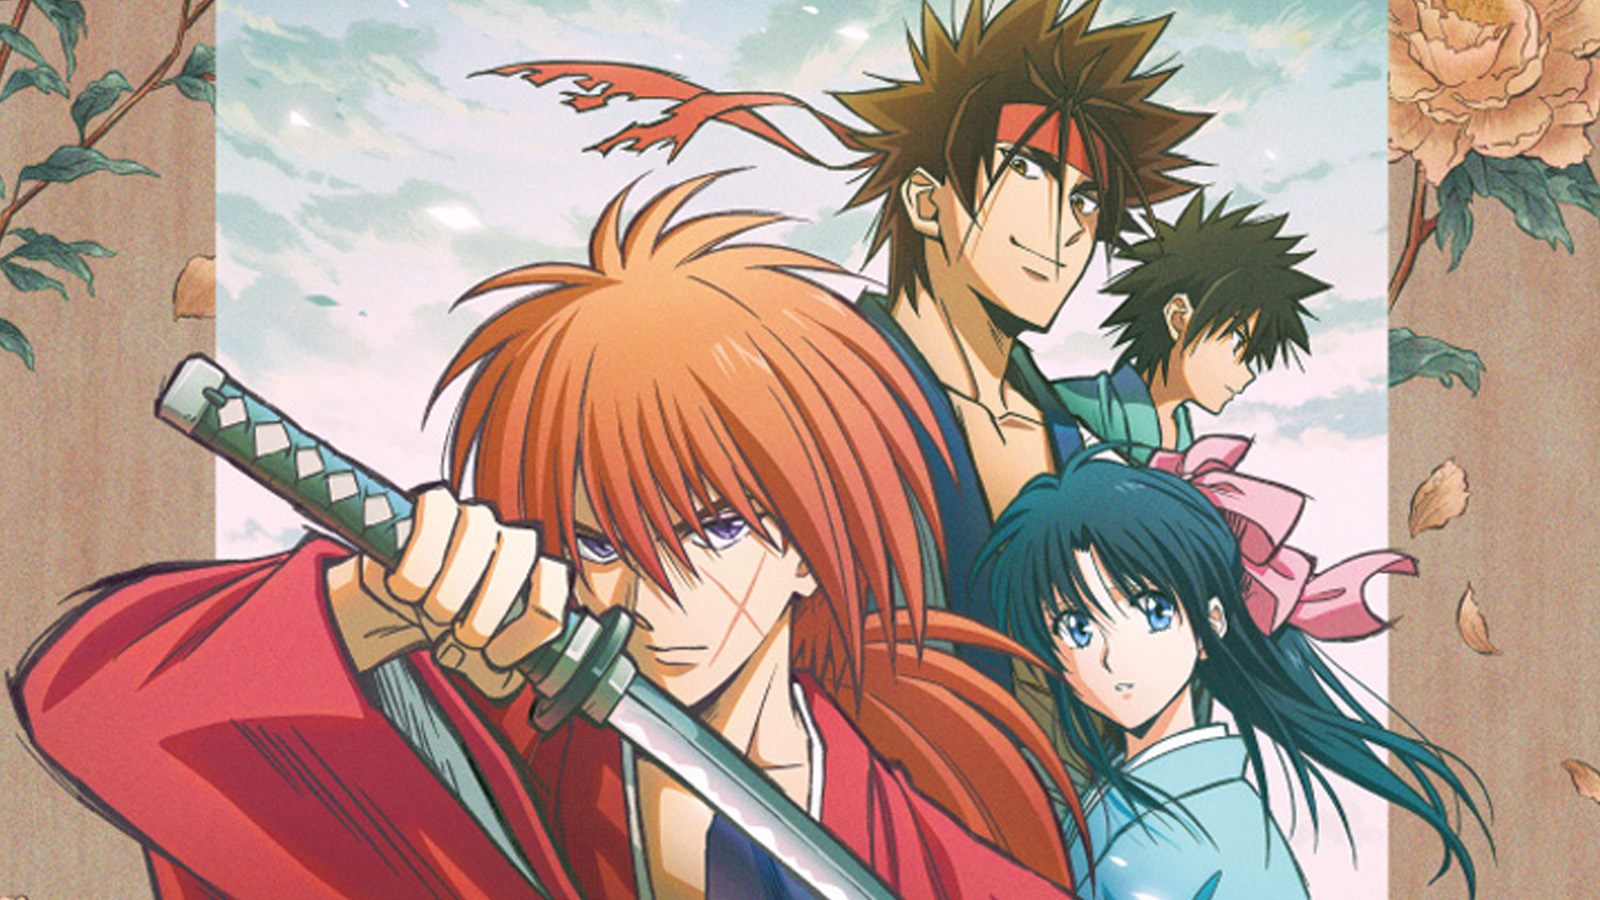 Rurouni Kenshin Season 1 Episode 2 Release Date